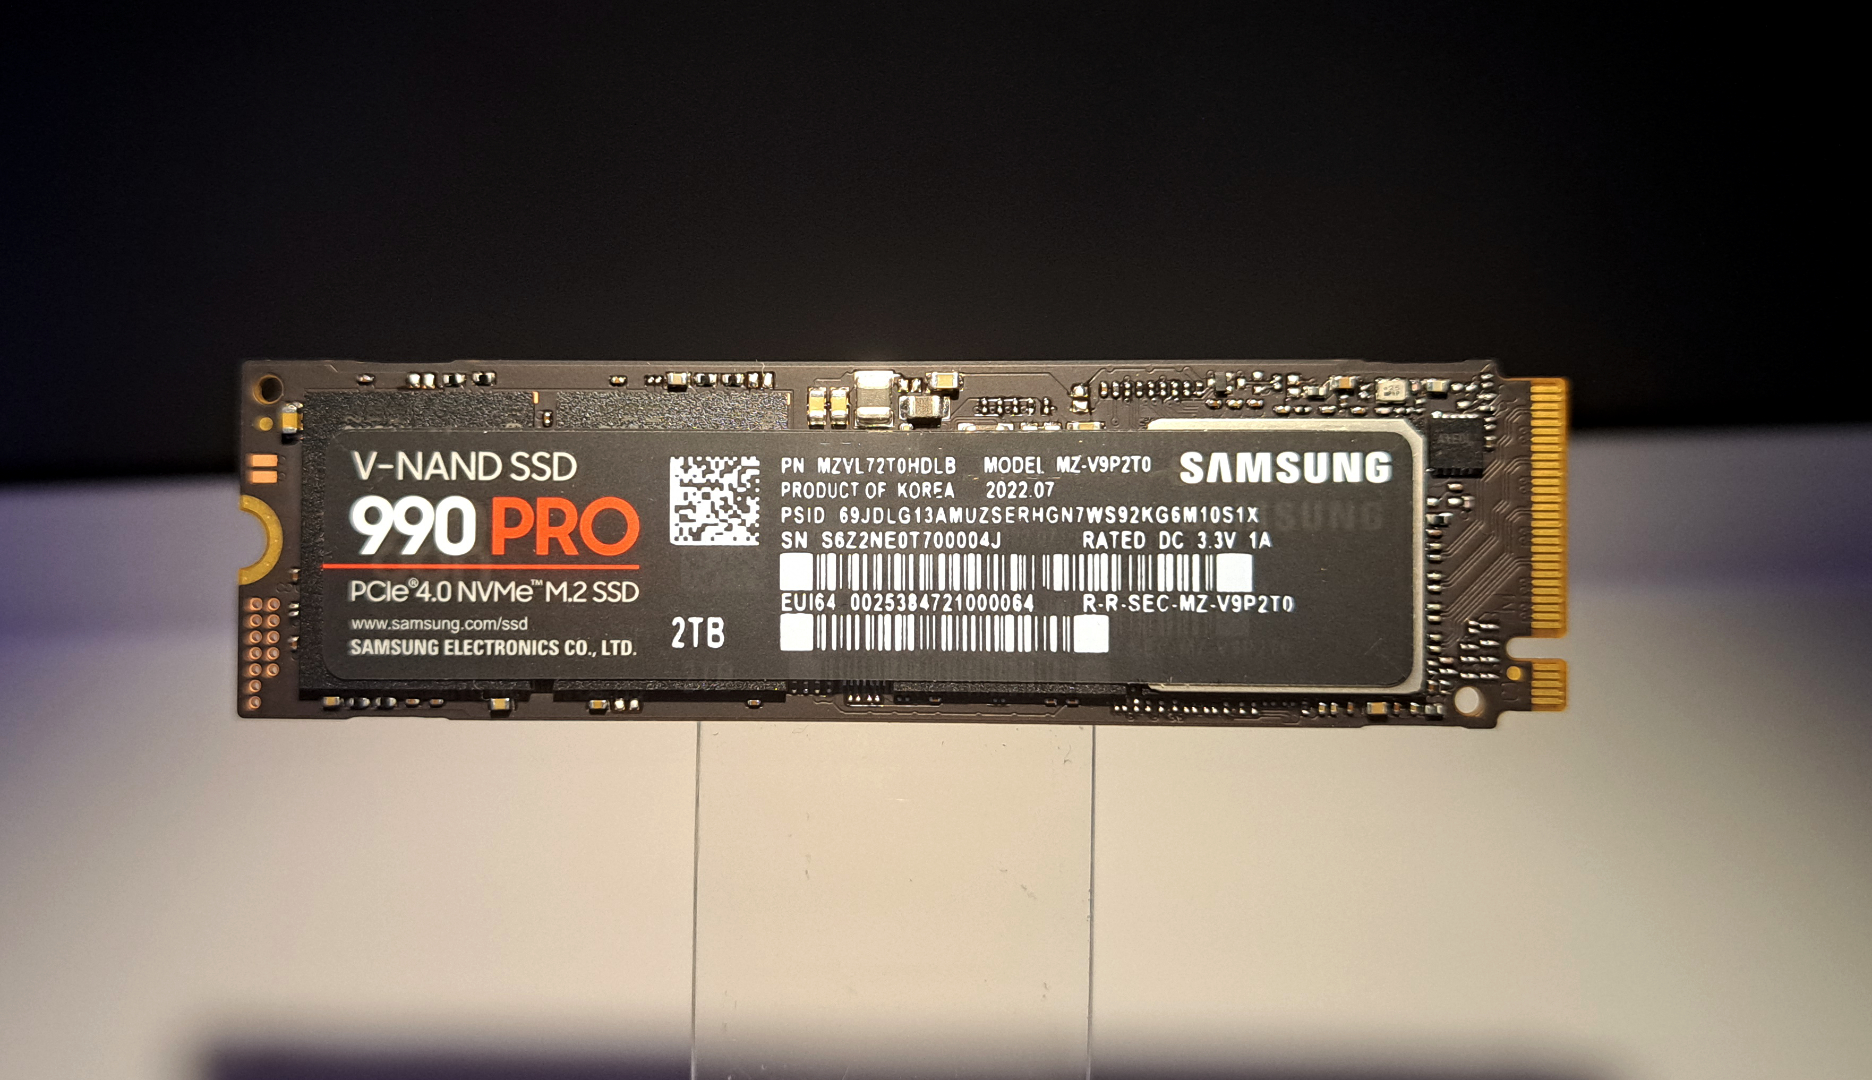 Samsung unveils high-performance 990 PRO SSD